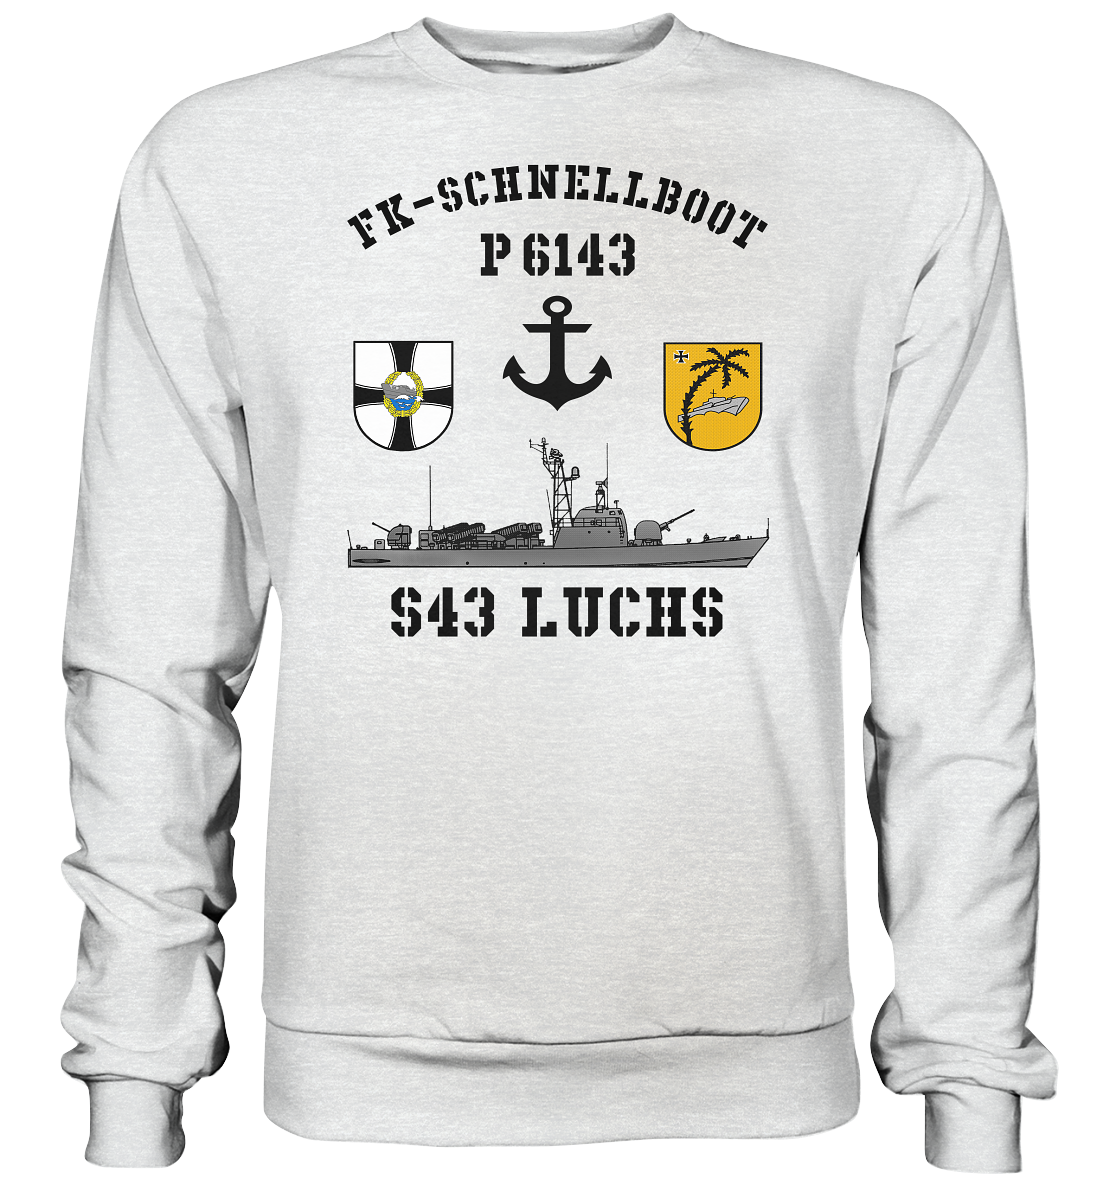 P6143 S43 LUCHS - Premium Sweatshirt